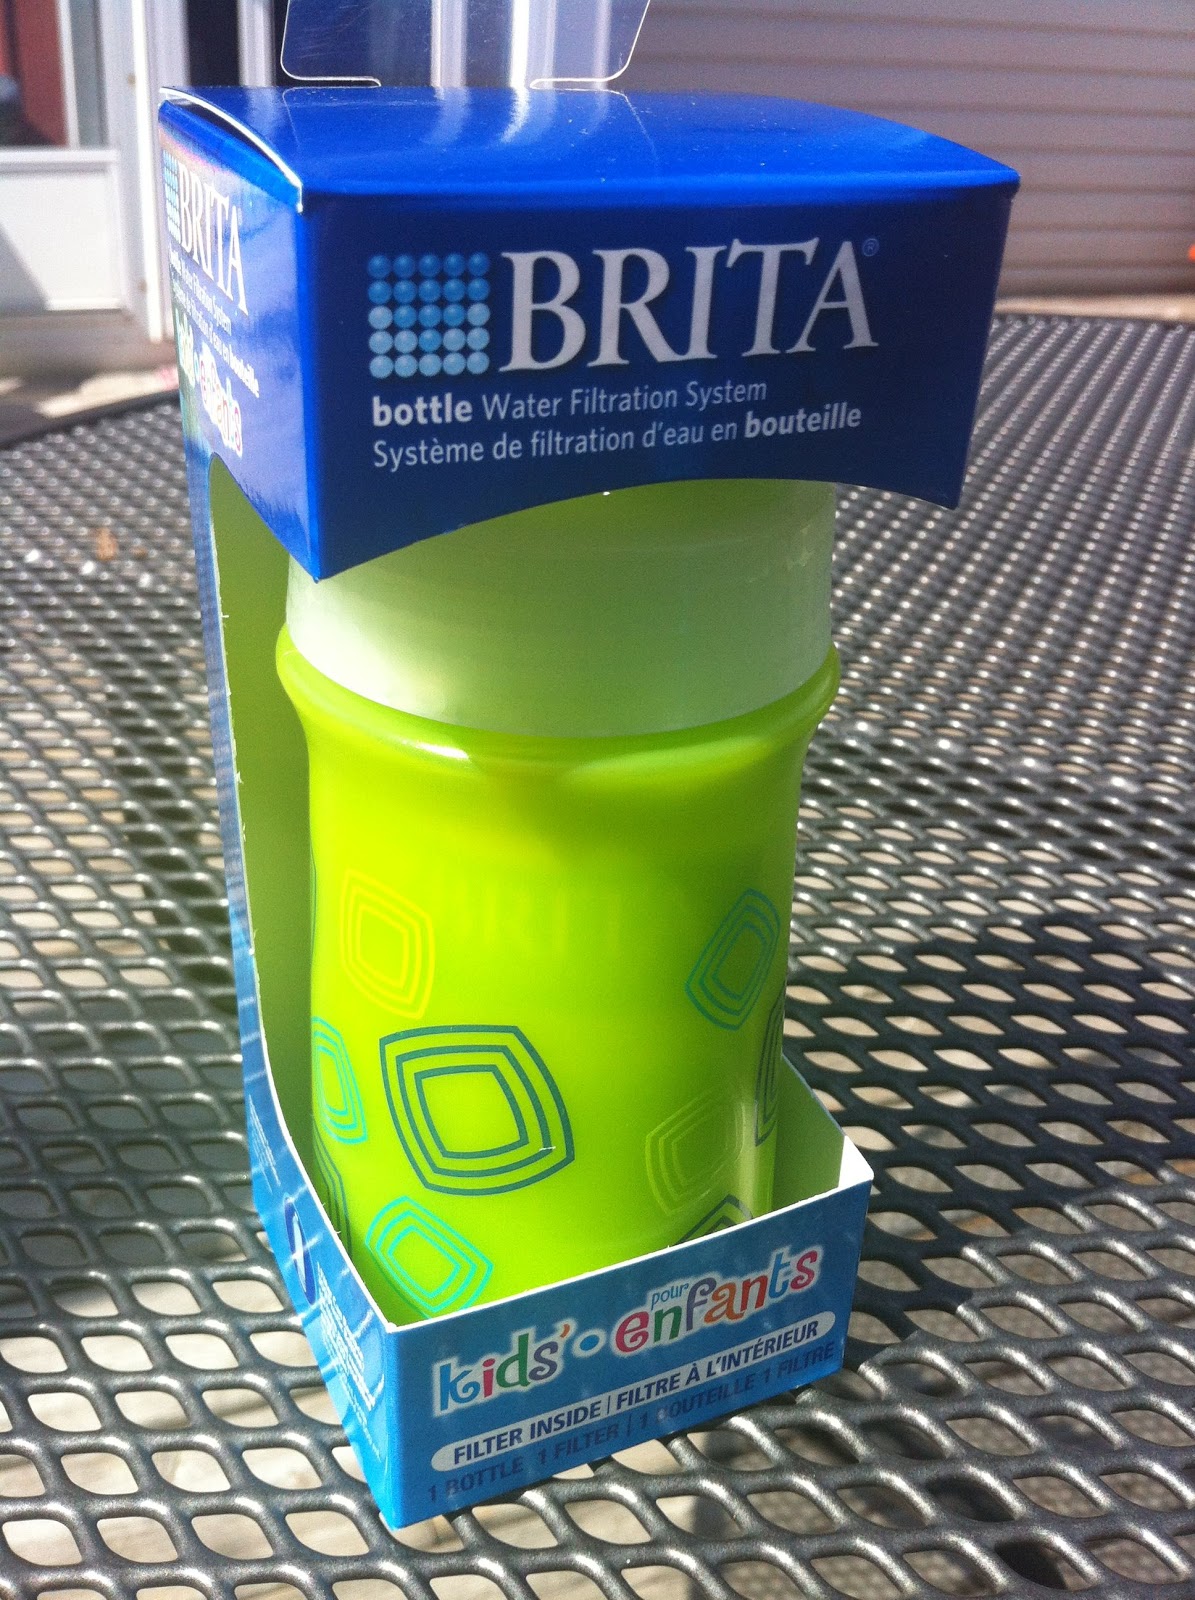 Brita water filters two